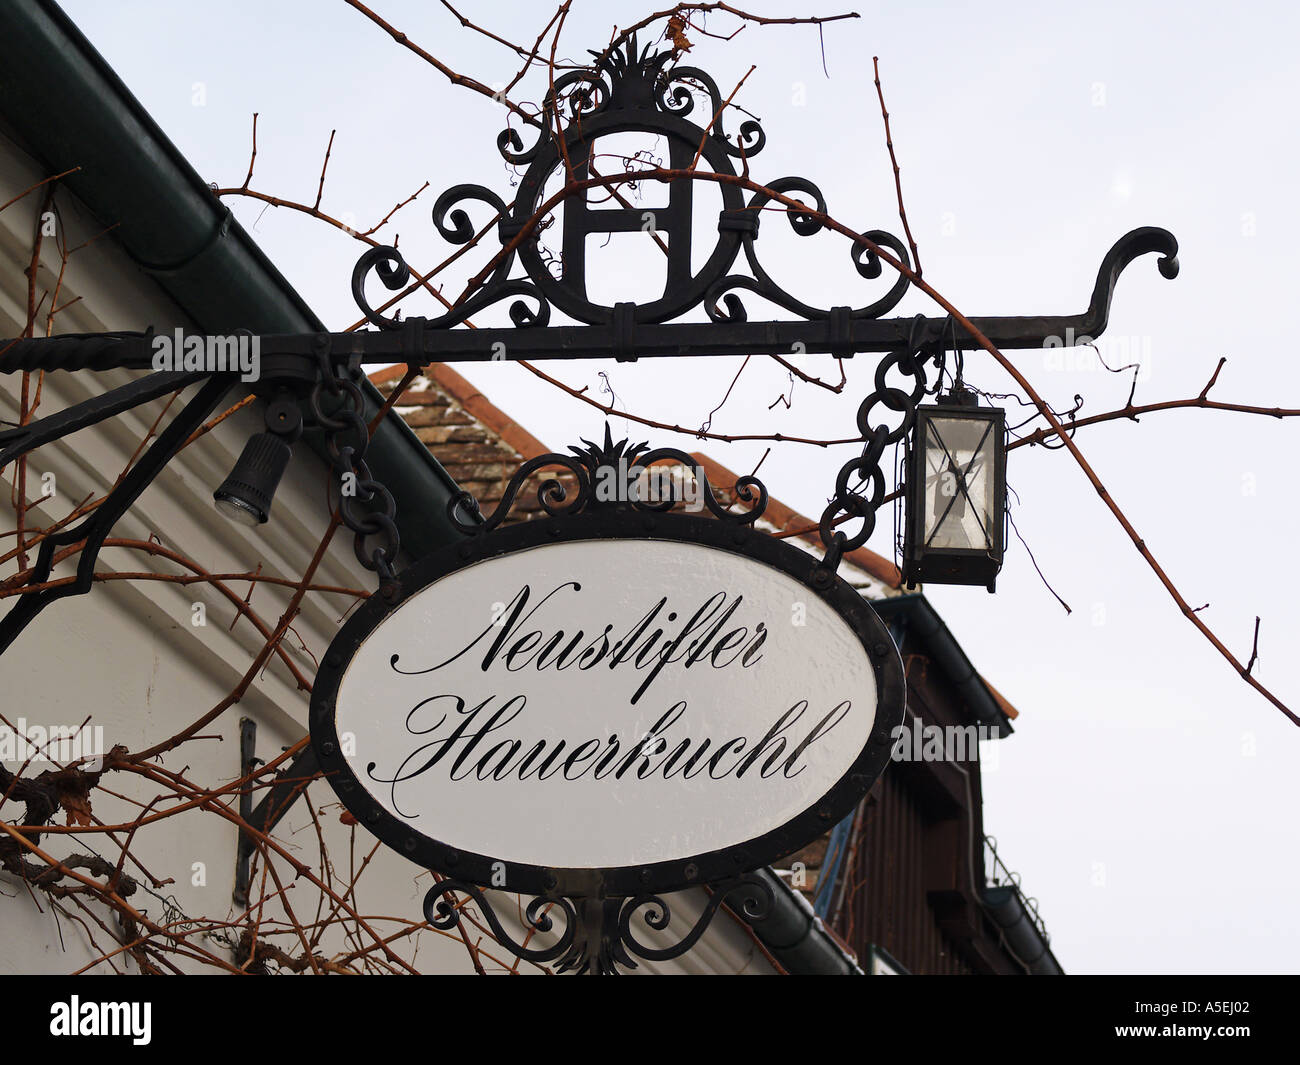 traditional sign, Neustifter Hauerkuchl Stock Photo